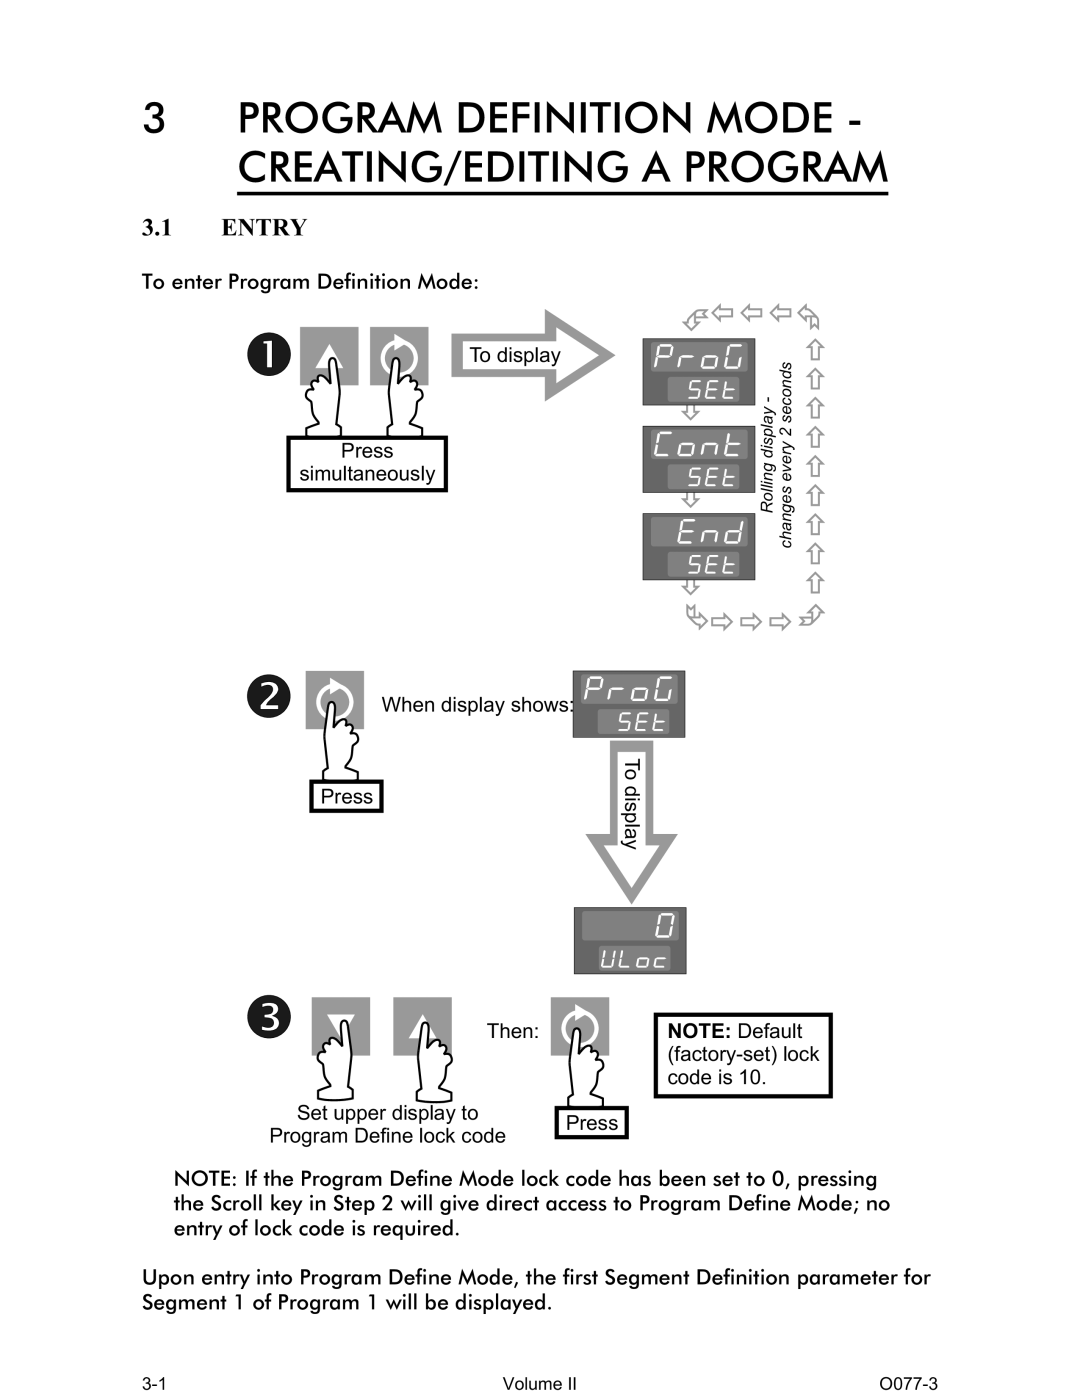 Omega CN1166 manual Entry, Program Definition Mode - Creating/Editing A Program 